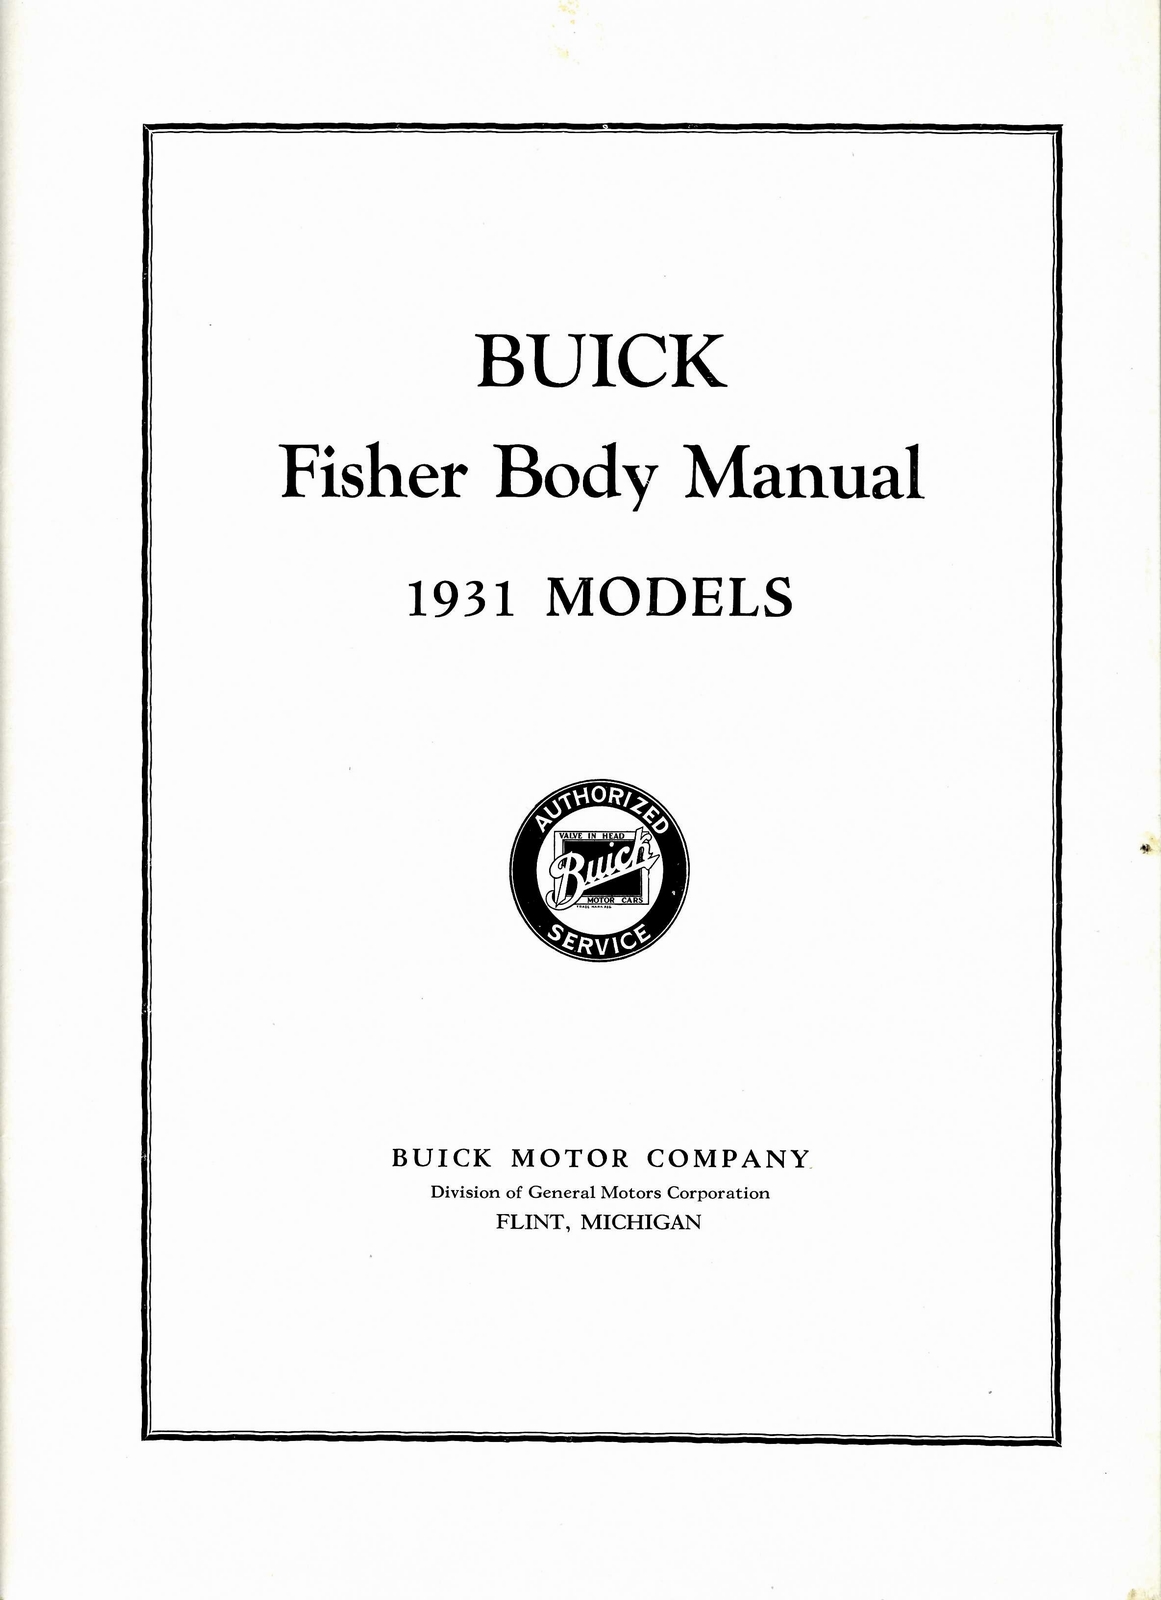 n_1931 Buick Fisher Body Manual-02.jpg